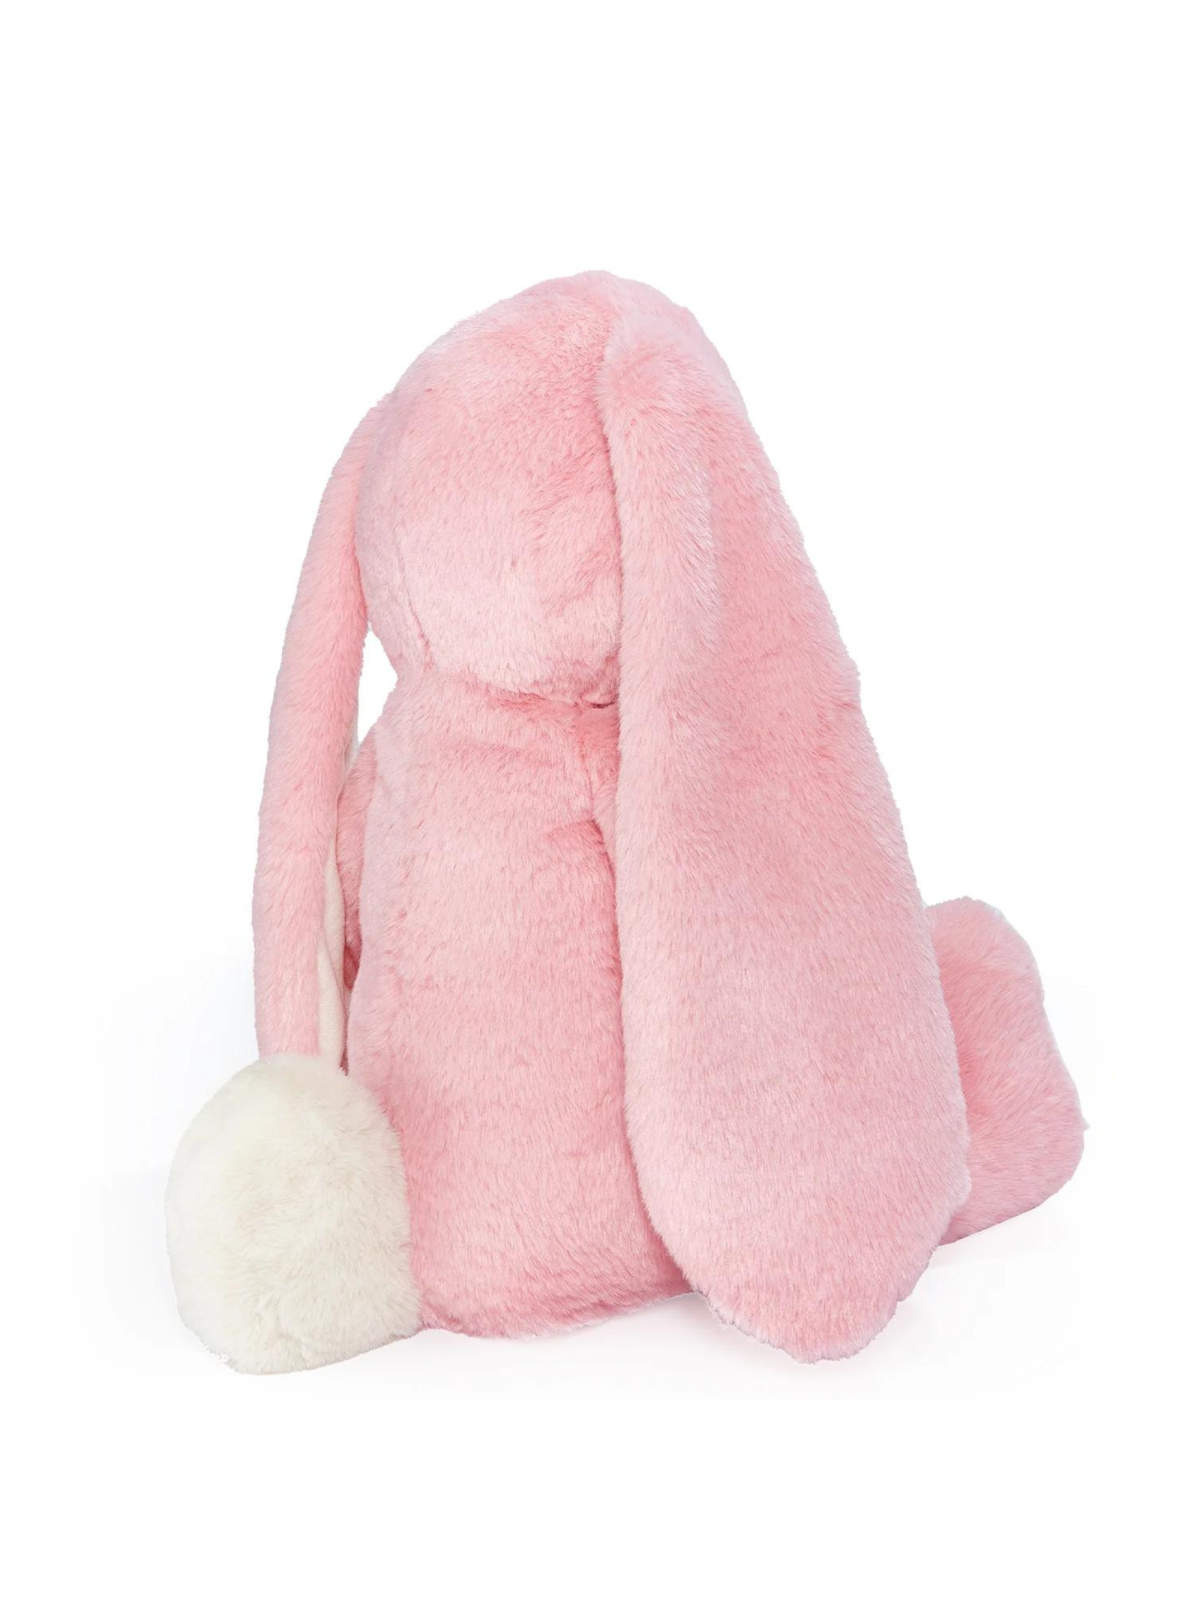 Big Floppy Nibble Bunny, Coral Blush